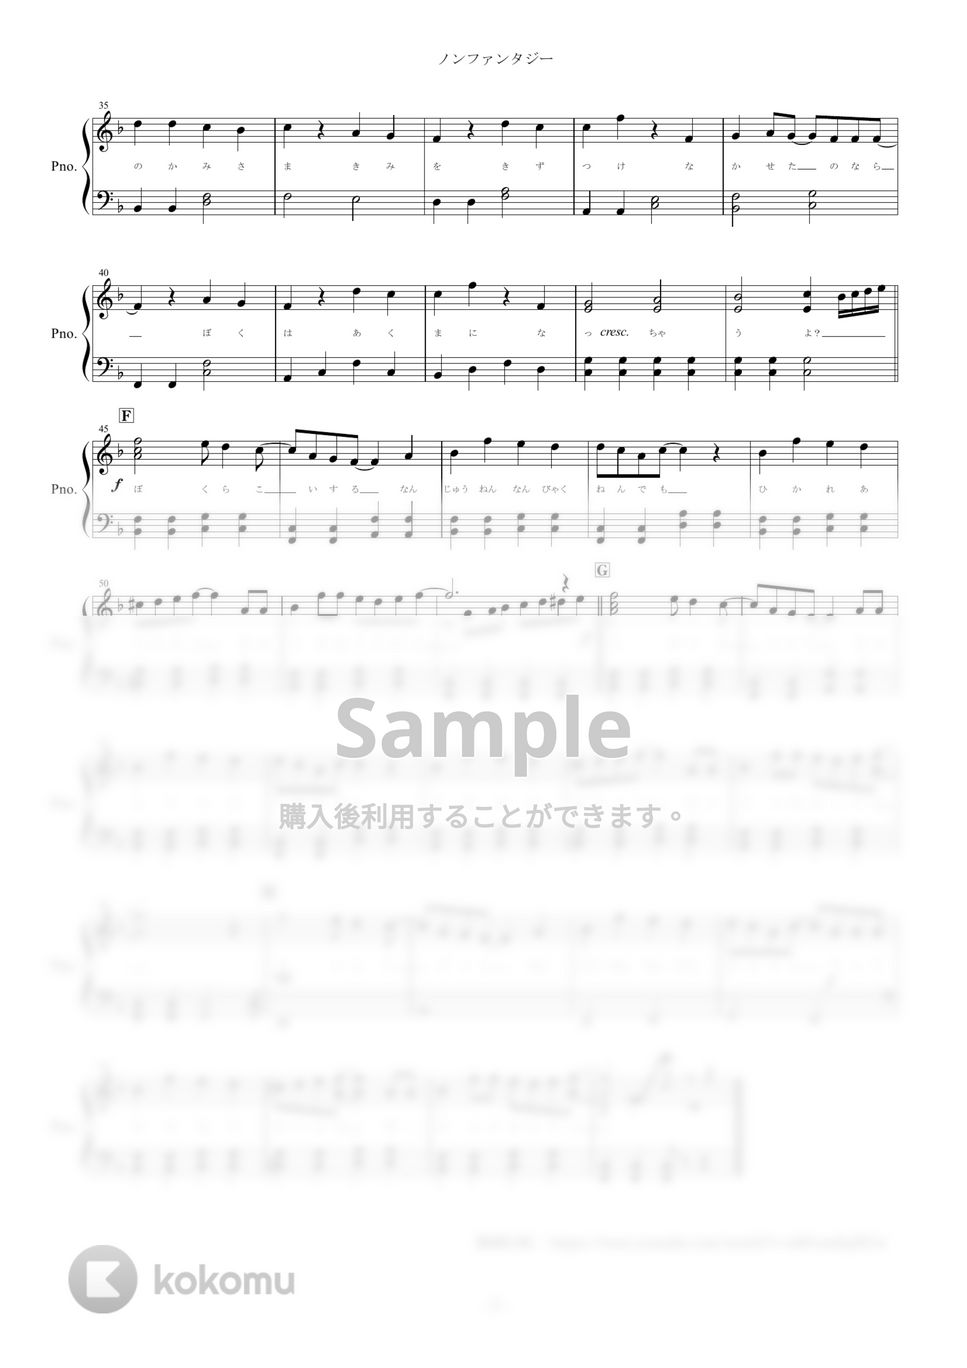 LIP×LIP - ノンファンタジー (ピアノ楽譜 / OPサイズ簡単 / 全２ページ) by yoshi